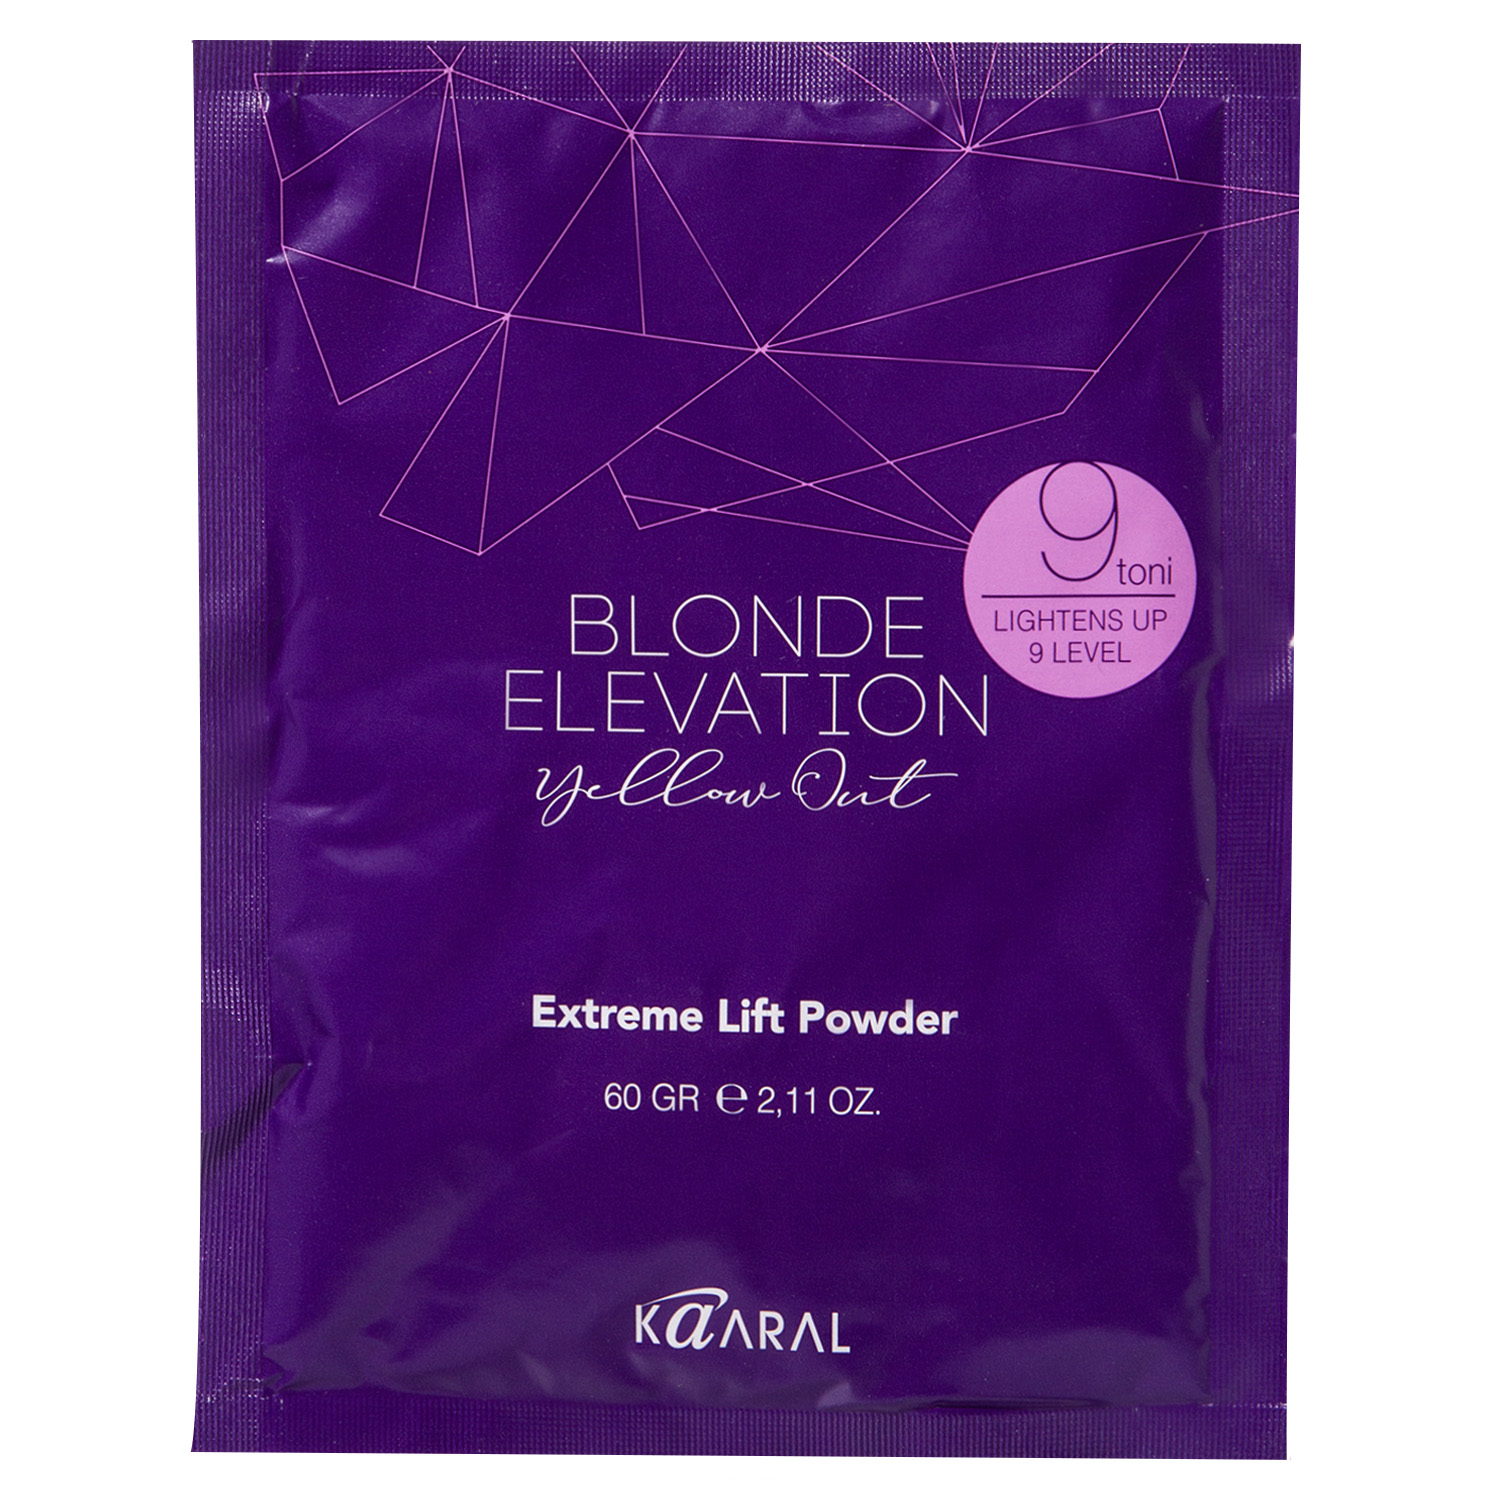 Kaaral Обесцвечивающий порошок Extreme Lift Powder, 60 г (Kaaral, Blonde Elevation)